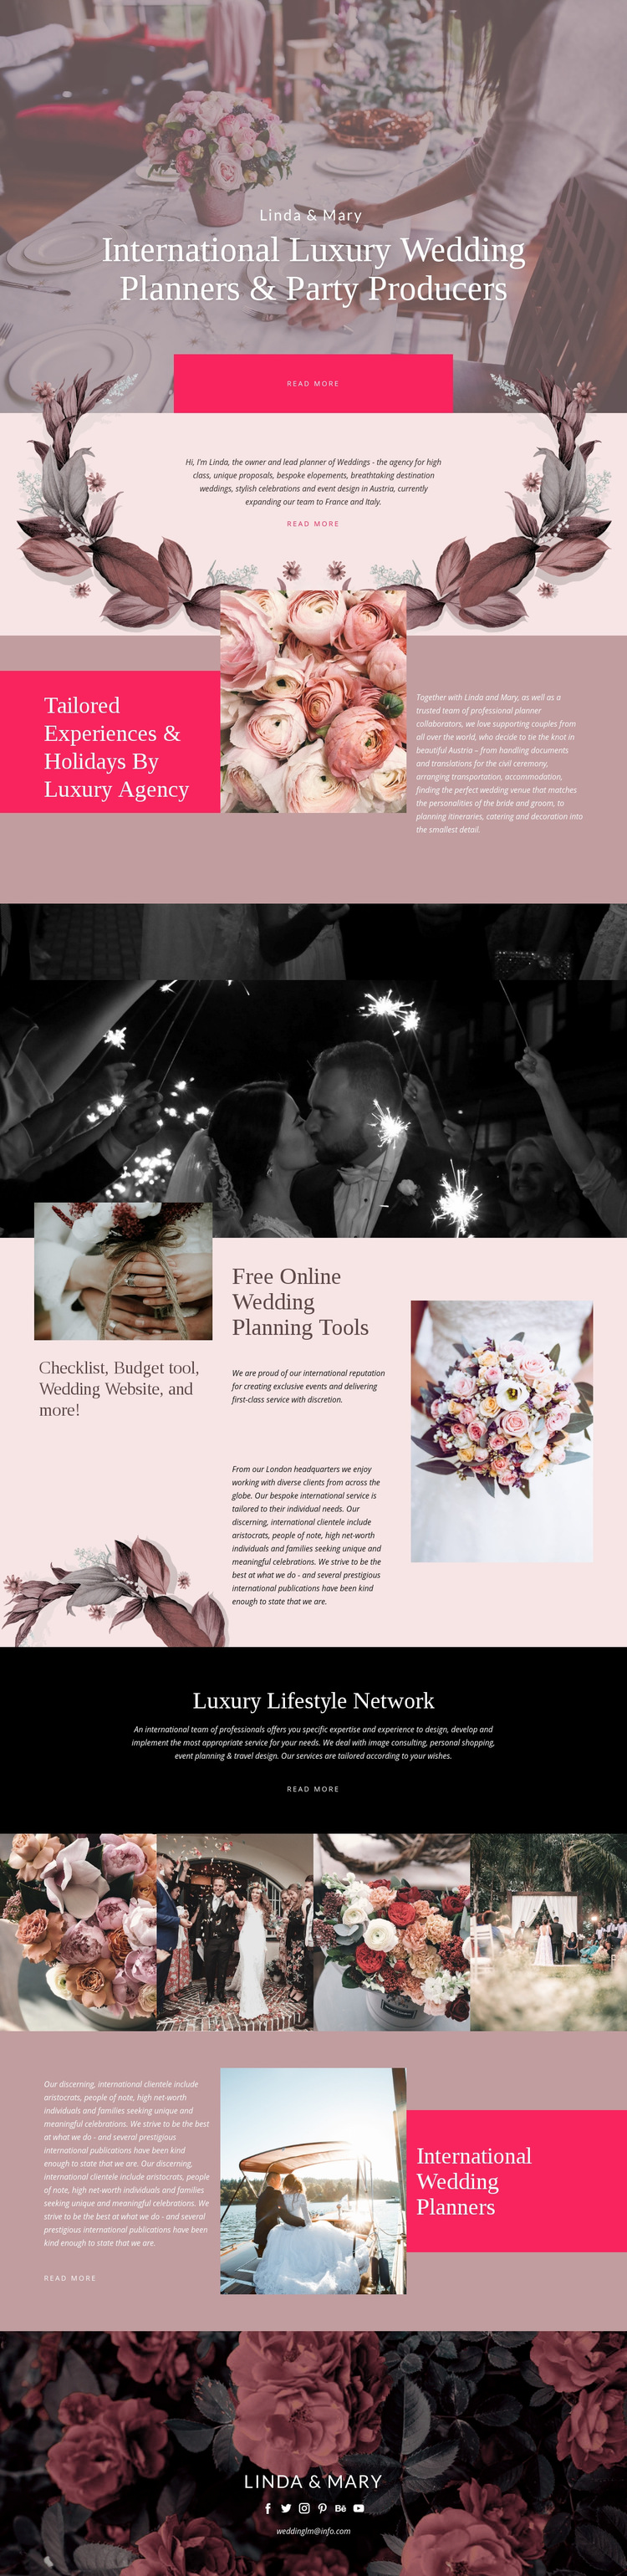 Luxury Wedding producers Web Page Design